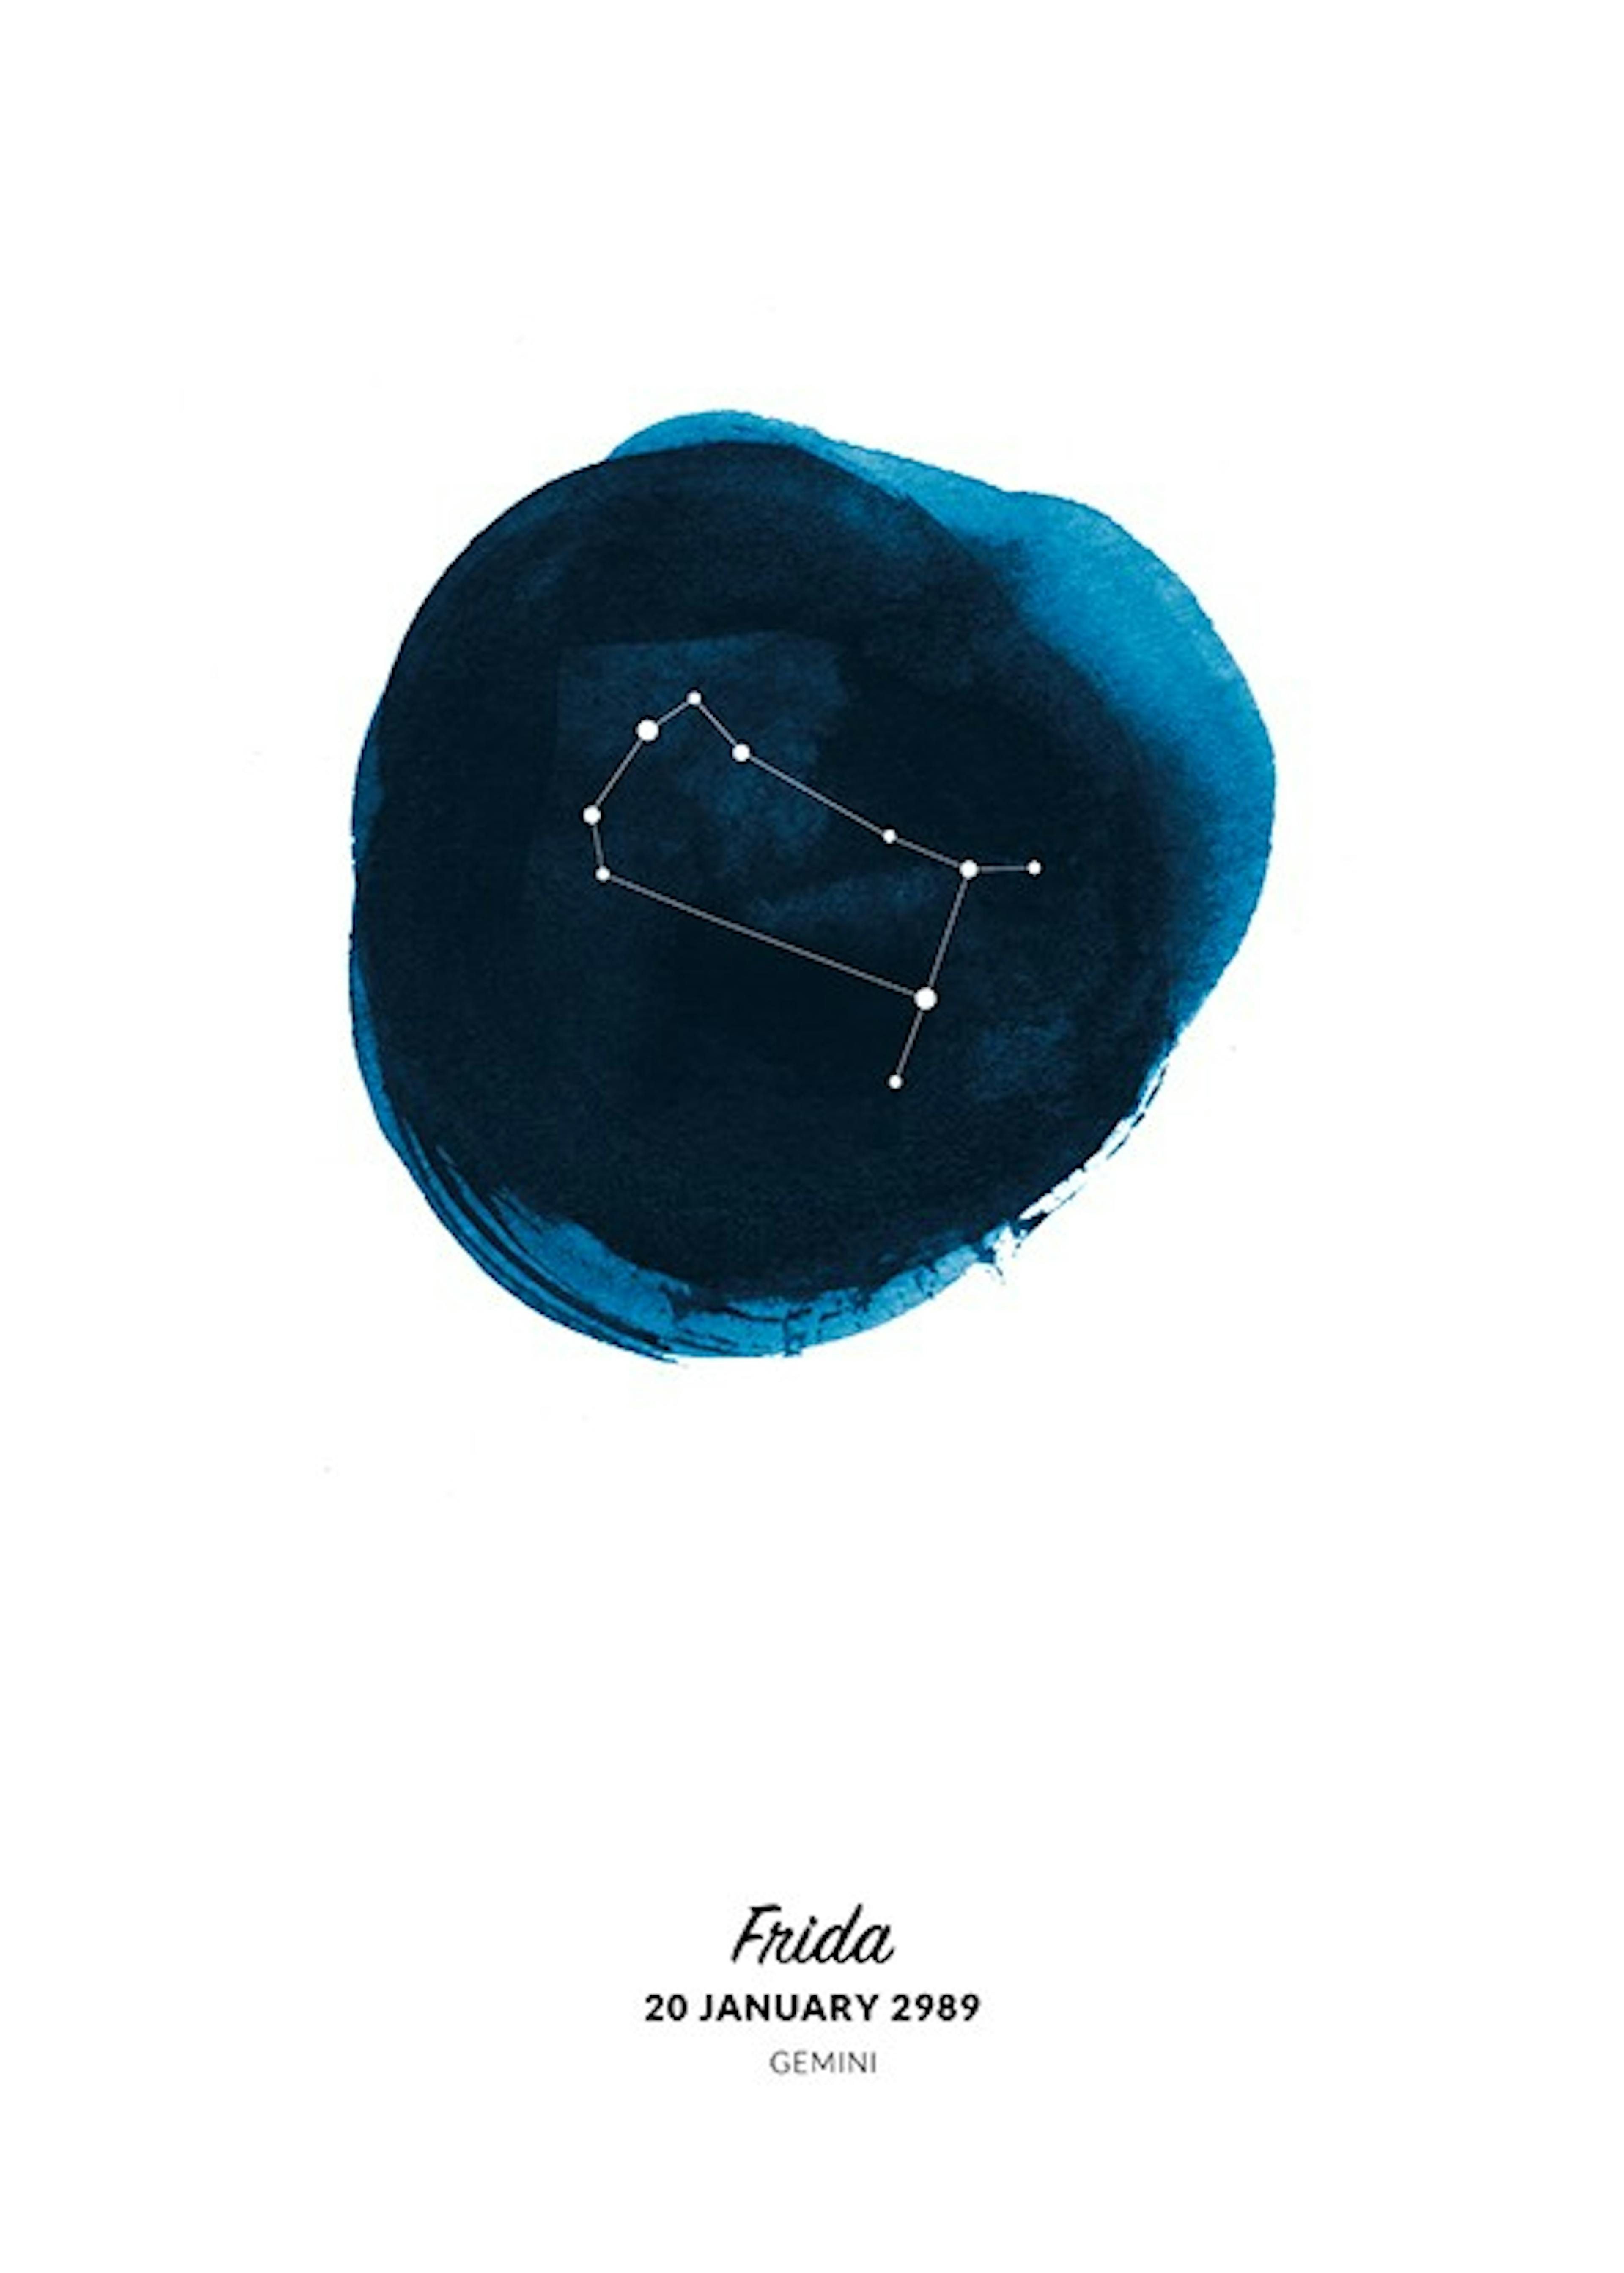 Zodiac Sign Gemini Personal Plakát 0